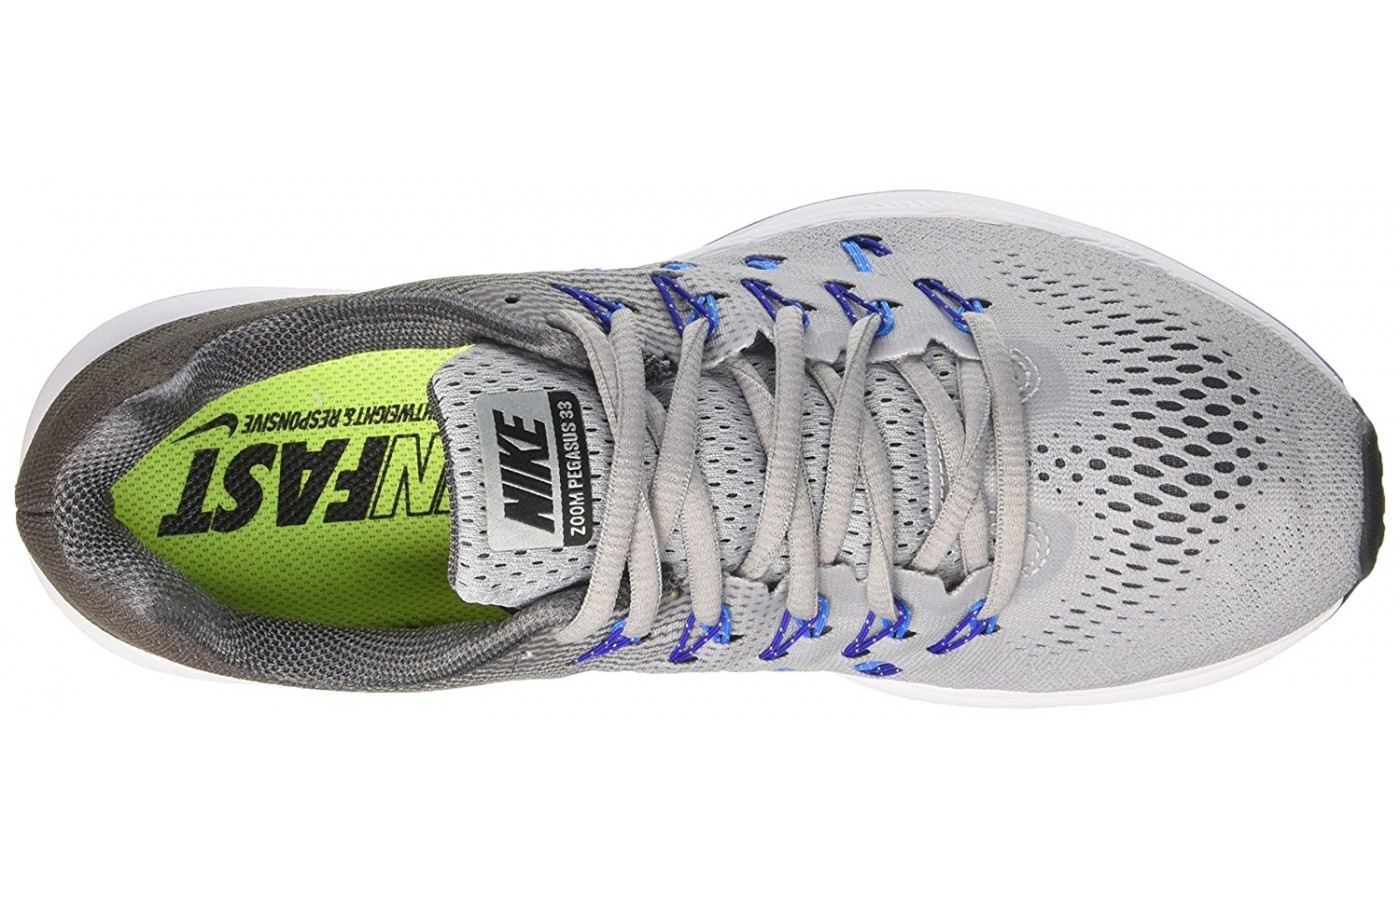 Three top view of the Nike Air Zoom Pegasus 33 running shoe